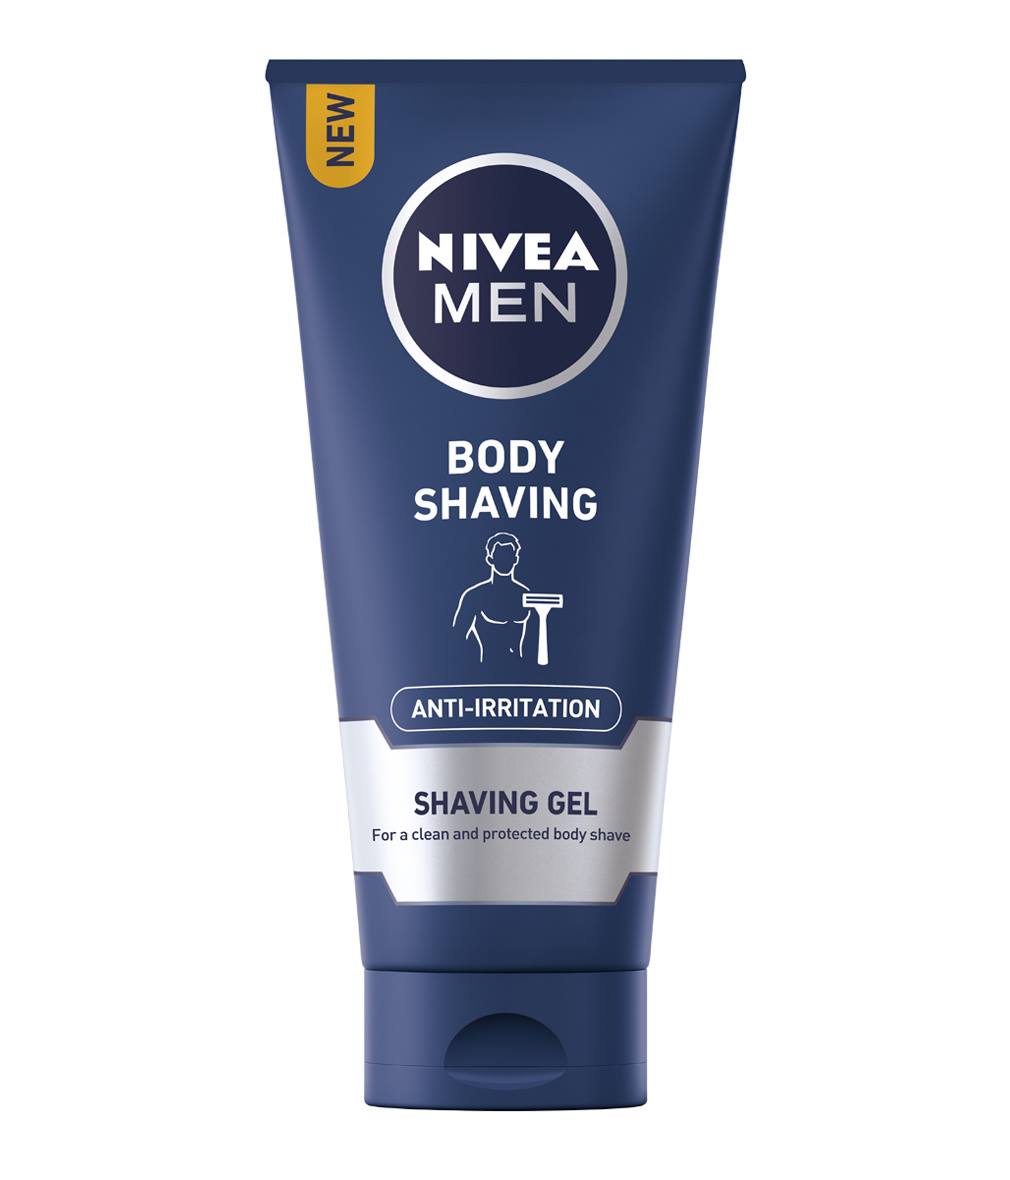 Shaving and Personal Care Products Logo - NIVEA MEN ANTI-IRRITATION | Body Shaving | NIVEA MEN